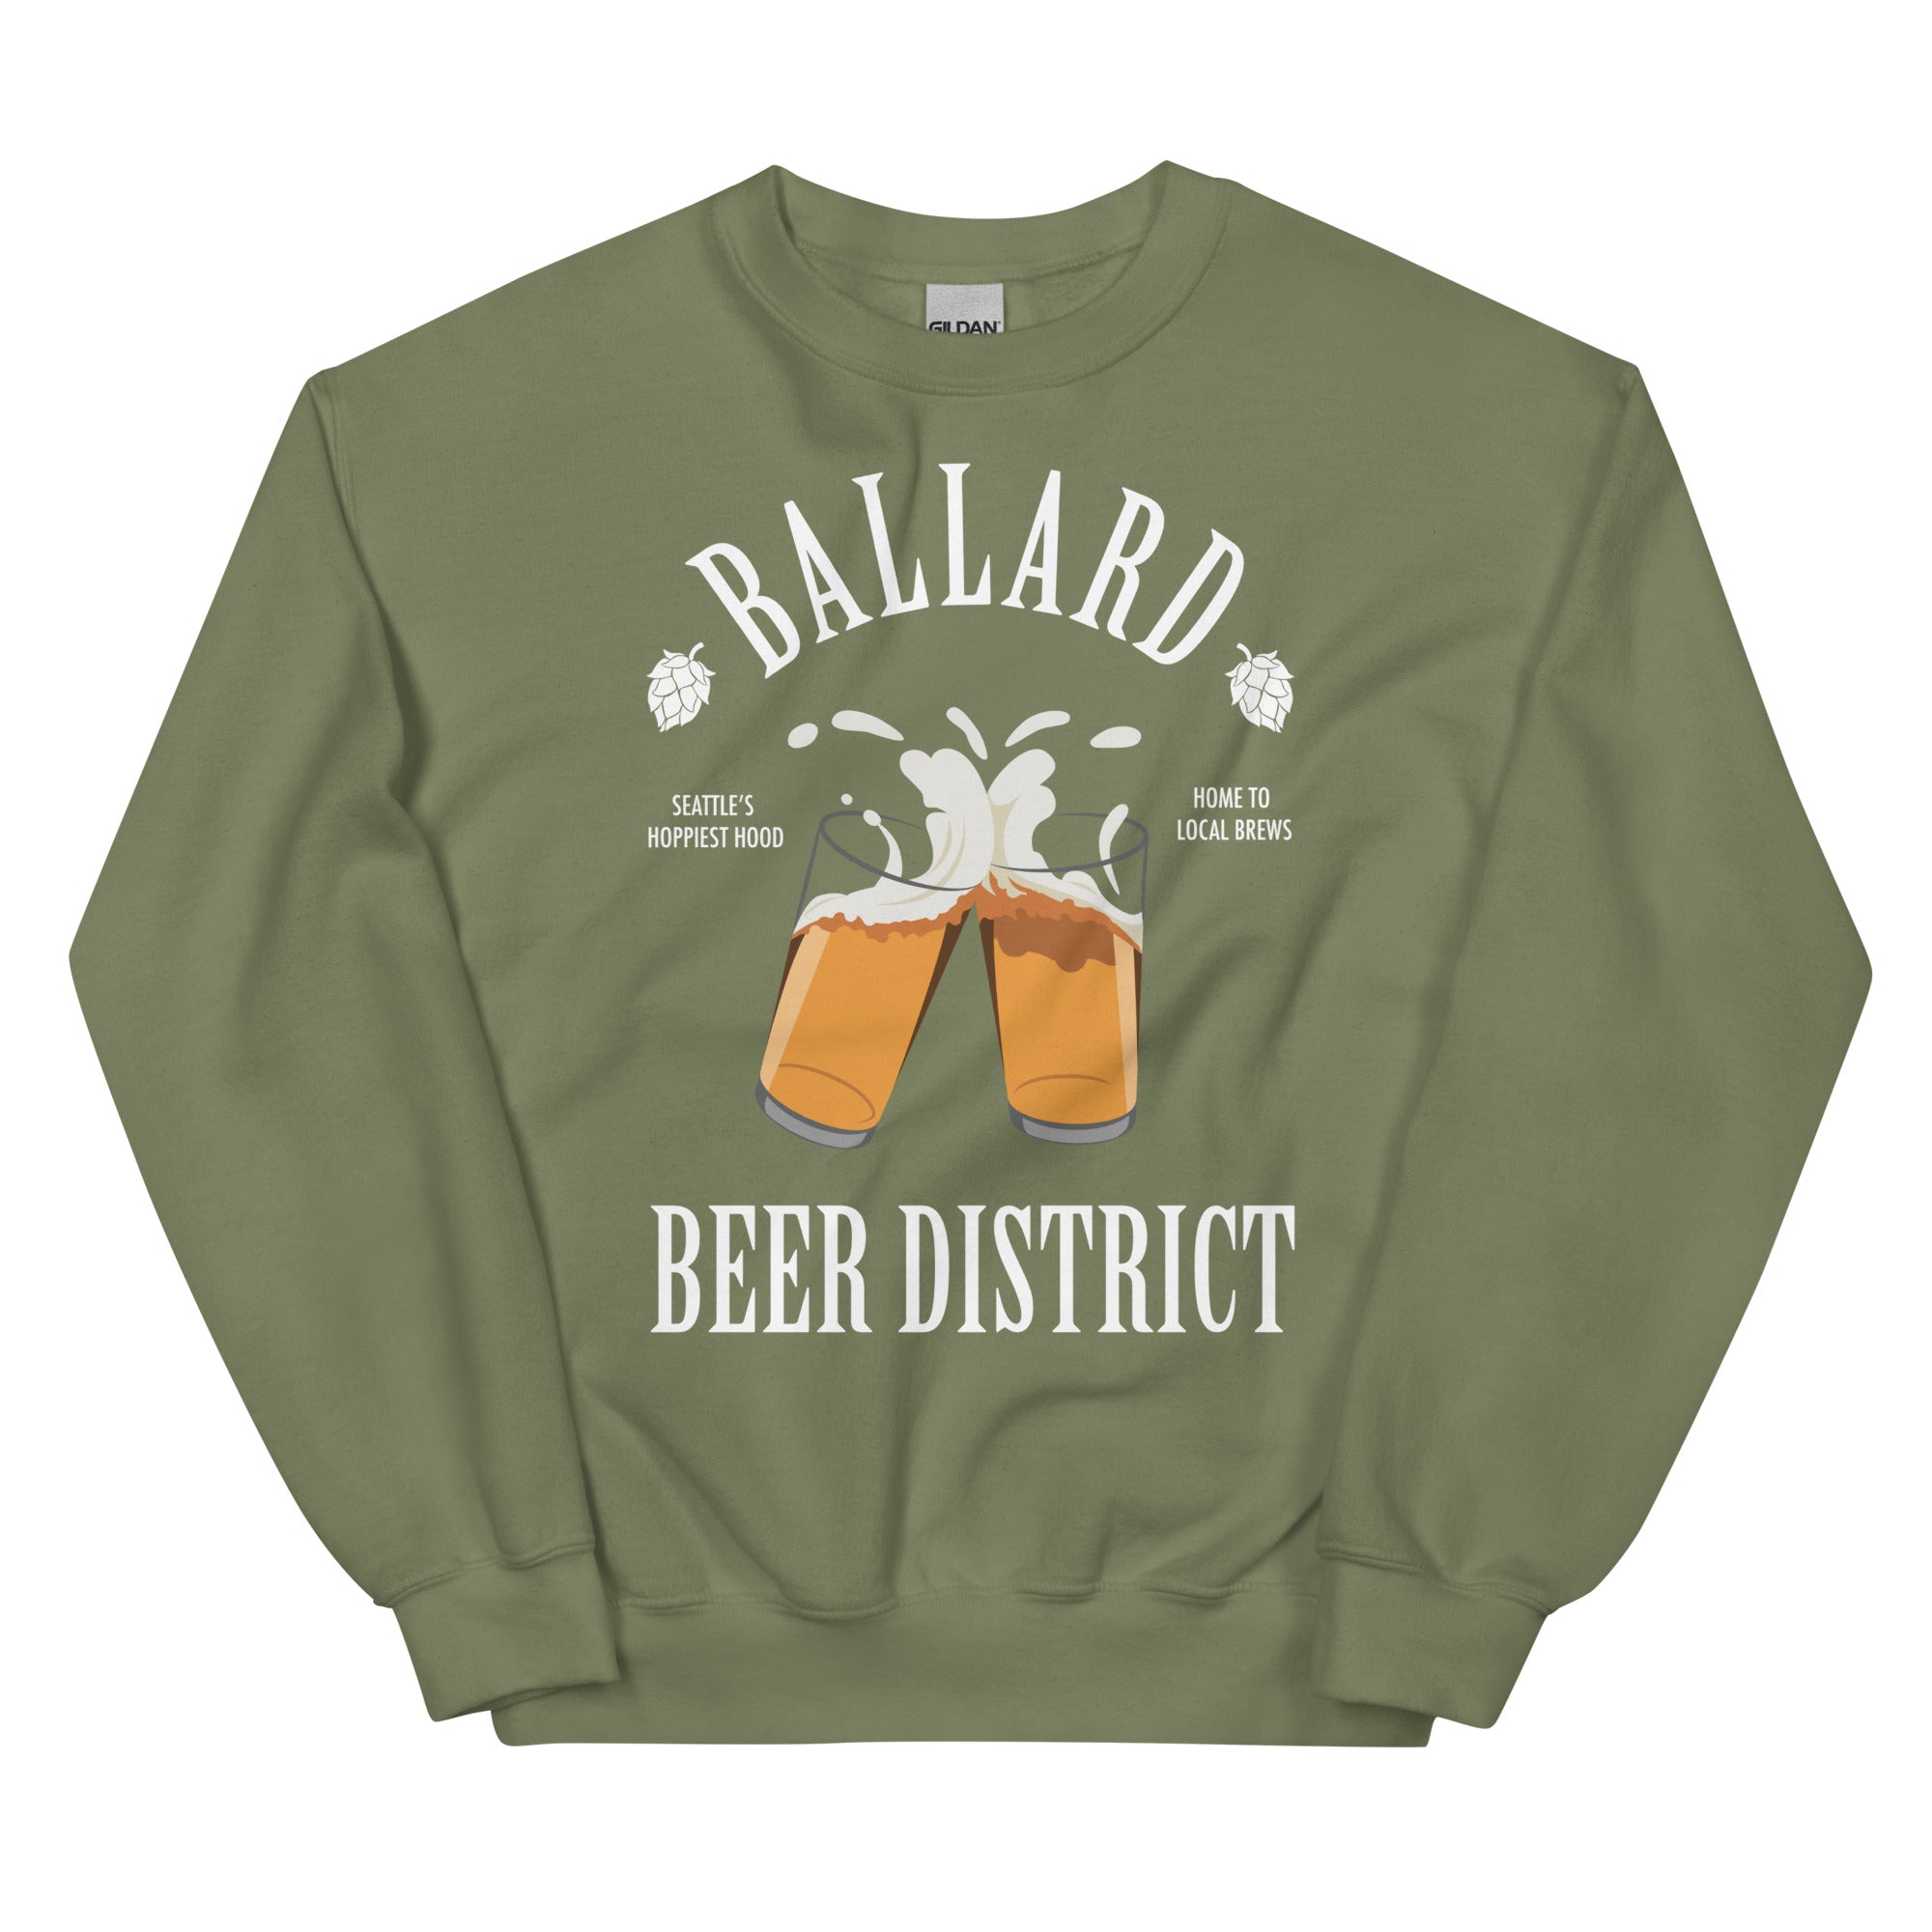 Beer District Crew Neck Sweatshirt - Ballard | Seattle, WA